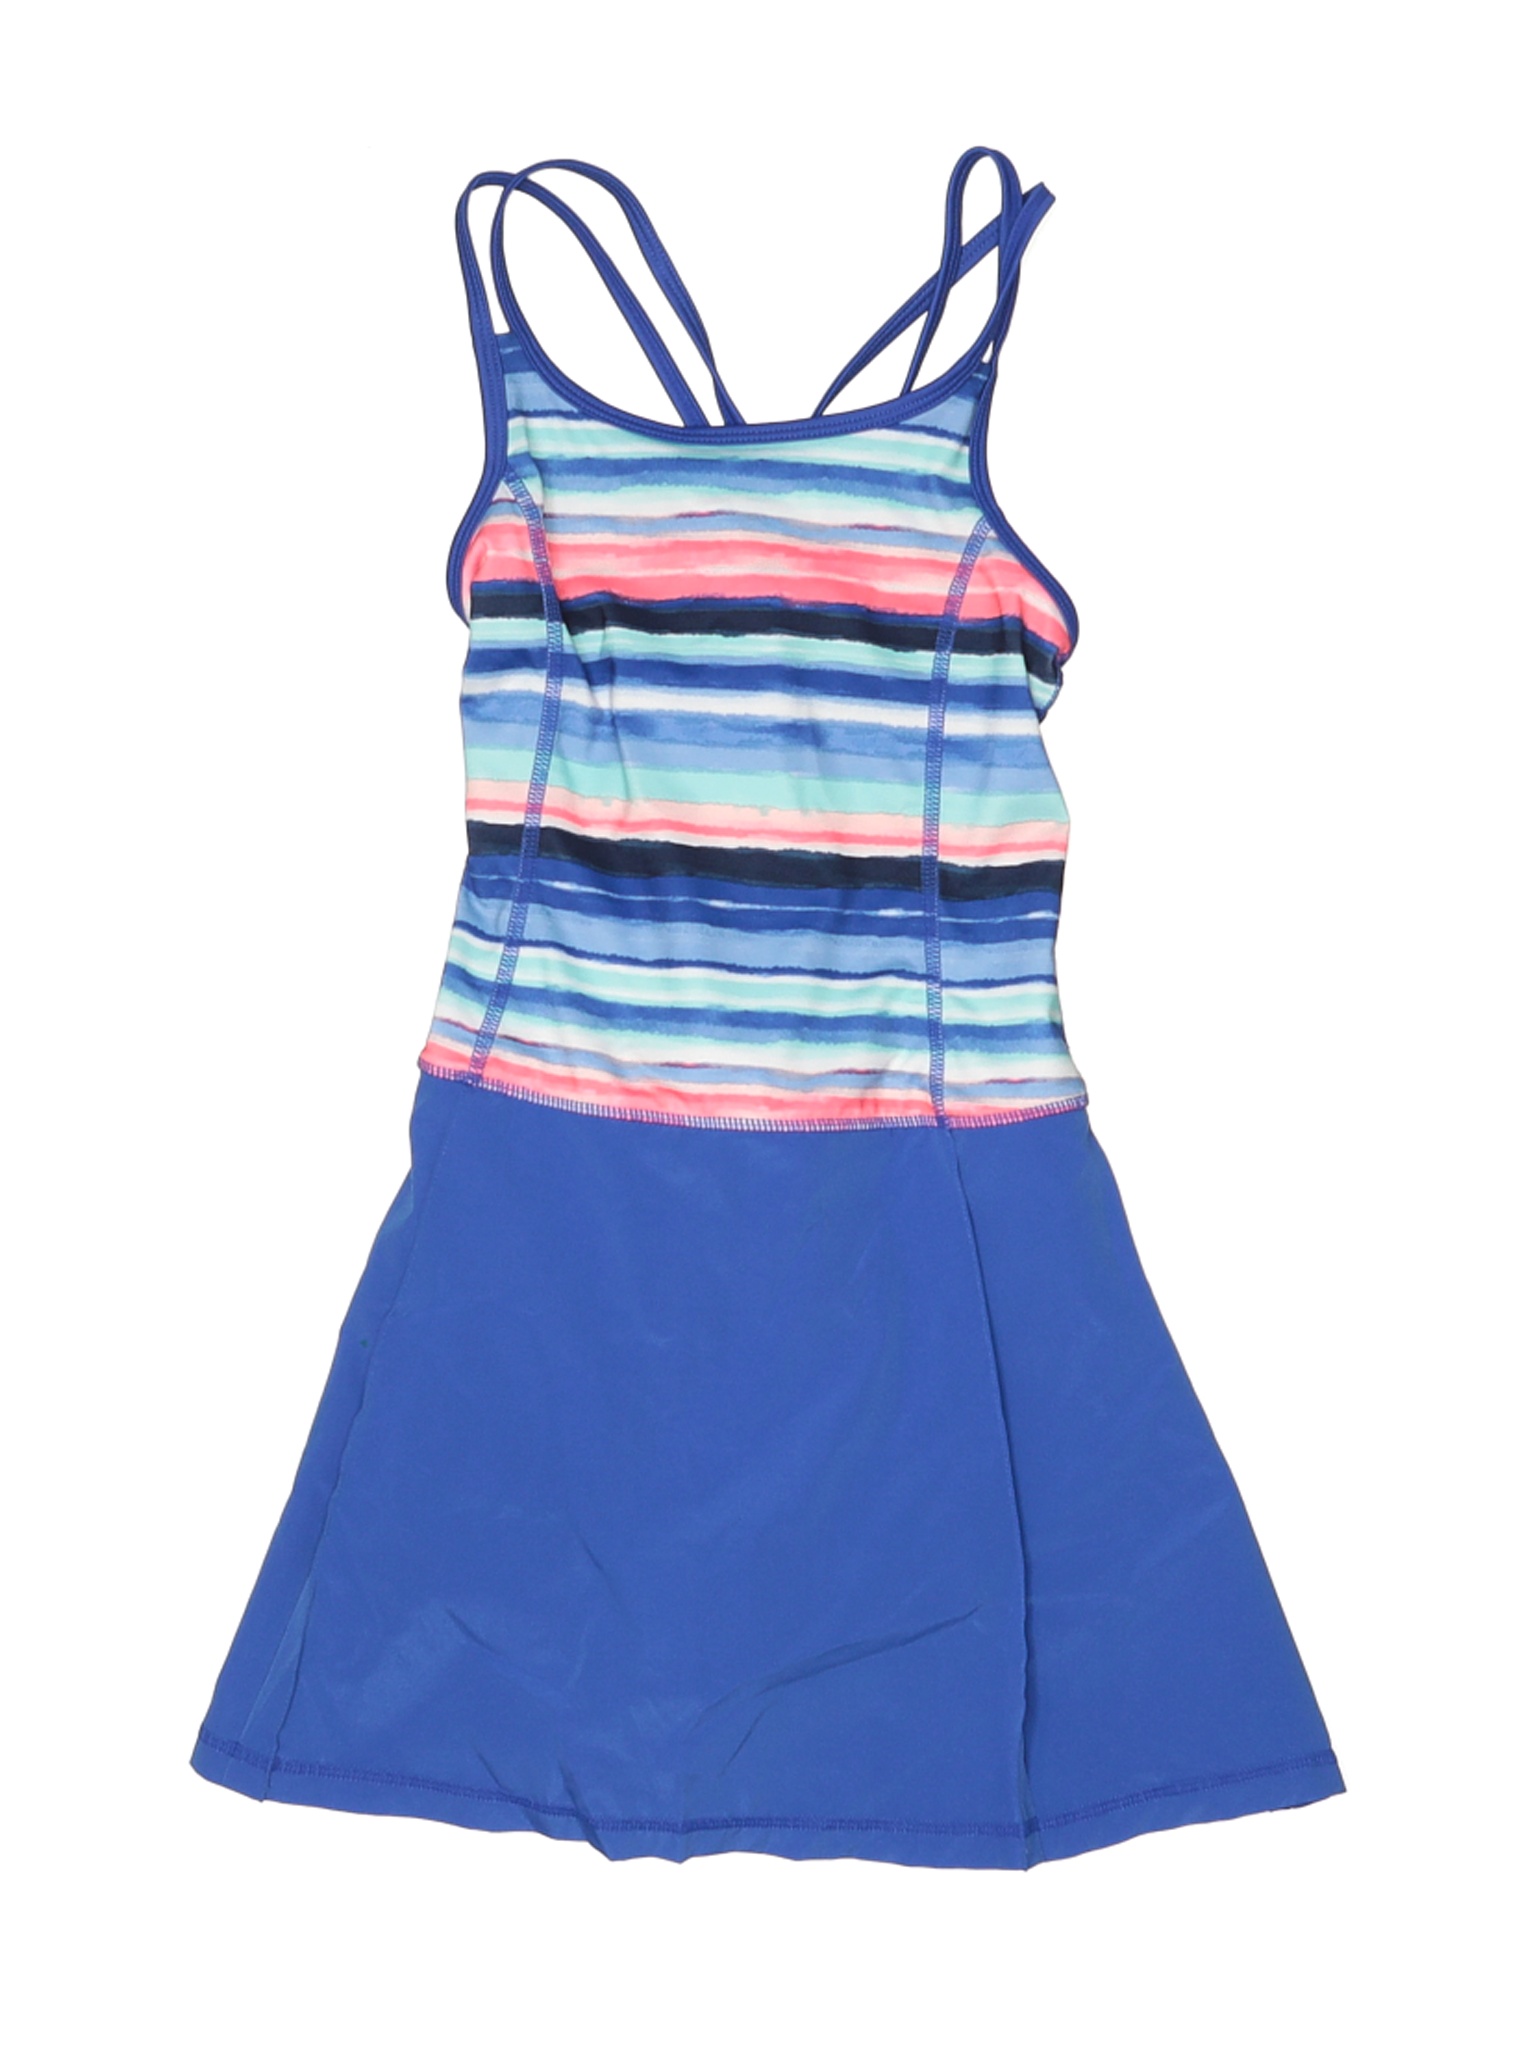 Gymgo Girls Blue Active Dress Medium kids | eBay